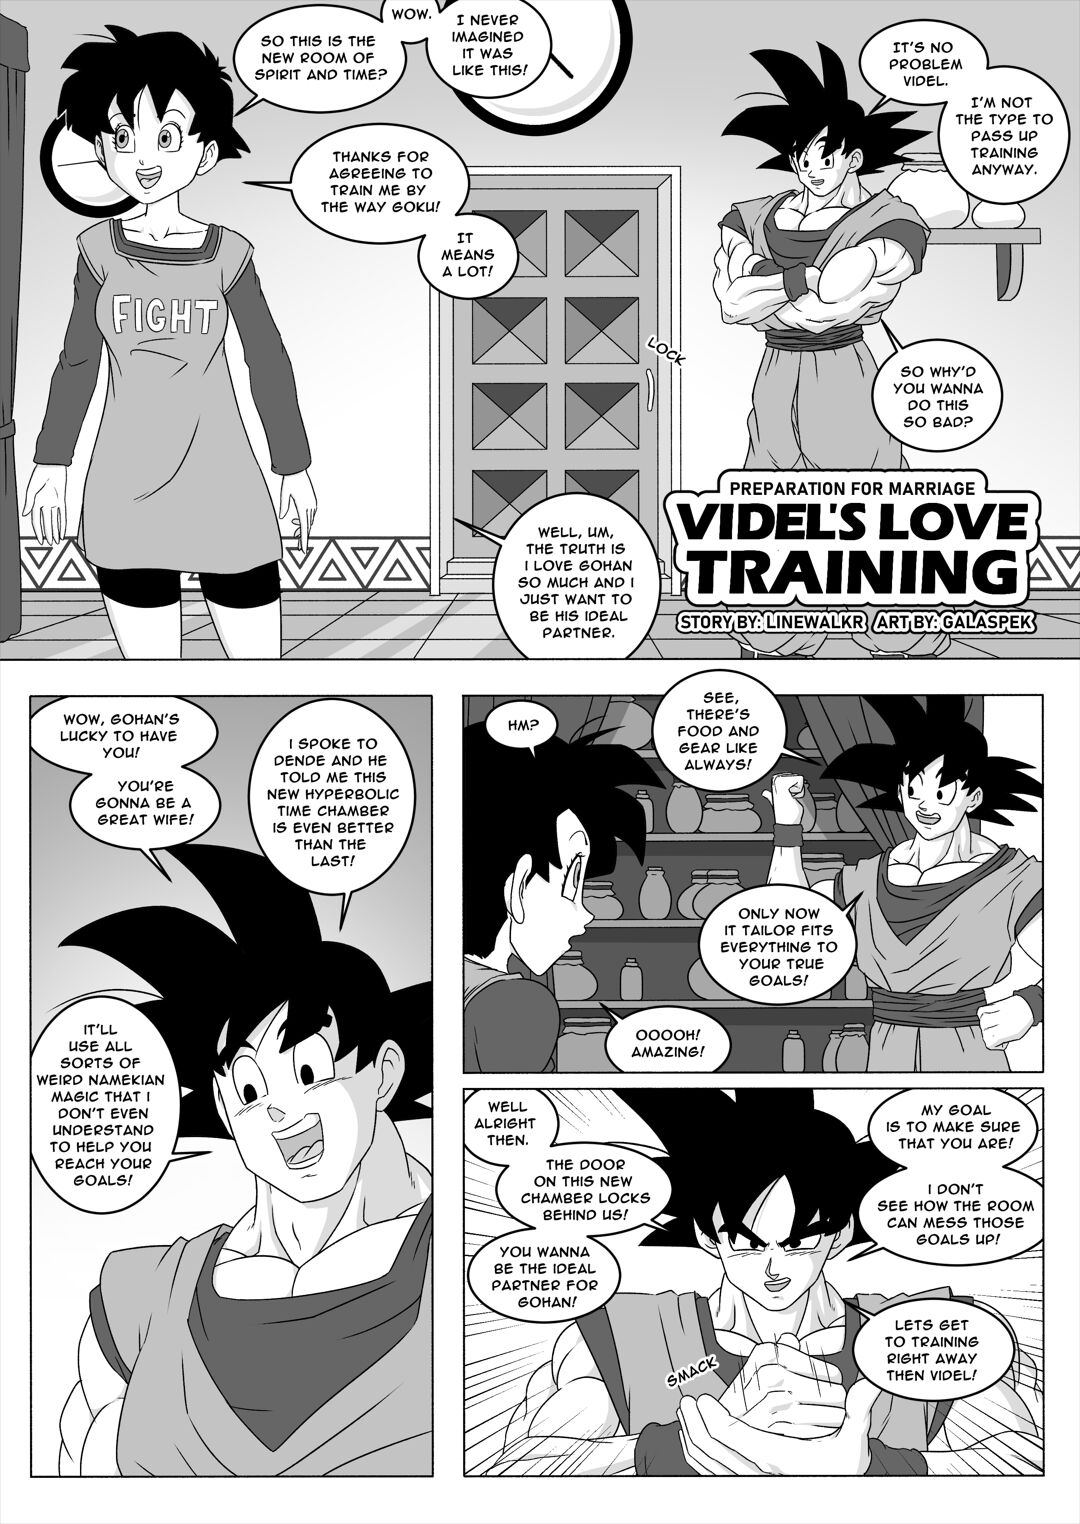 Videls Love Training Galaspek 02